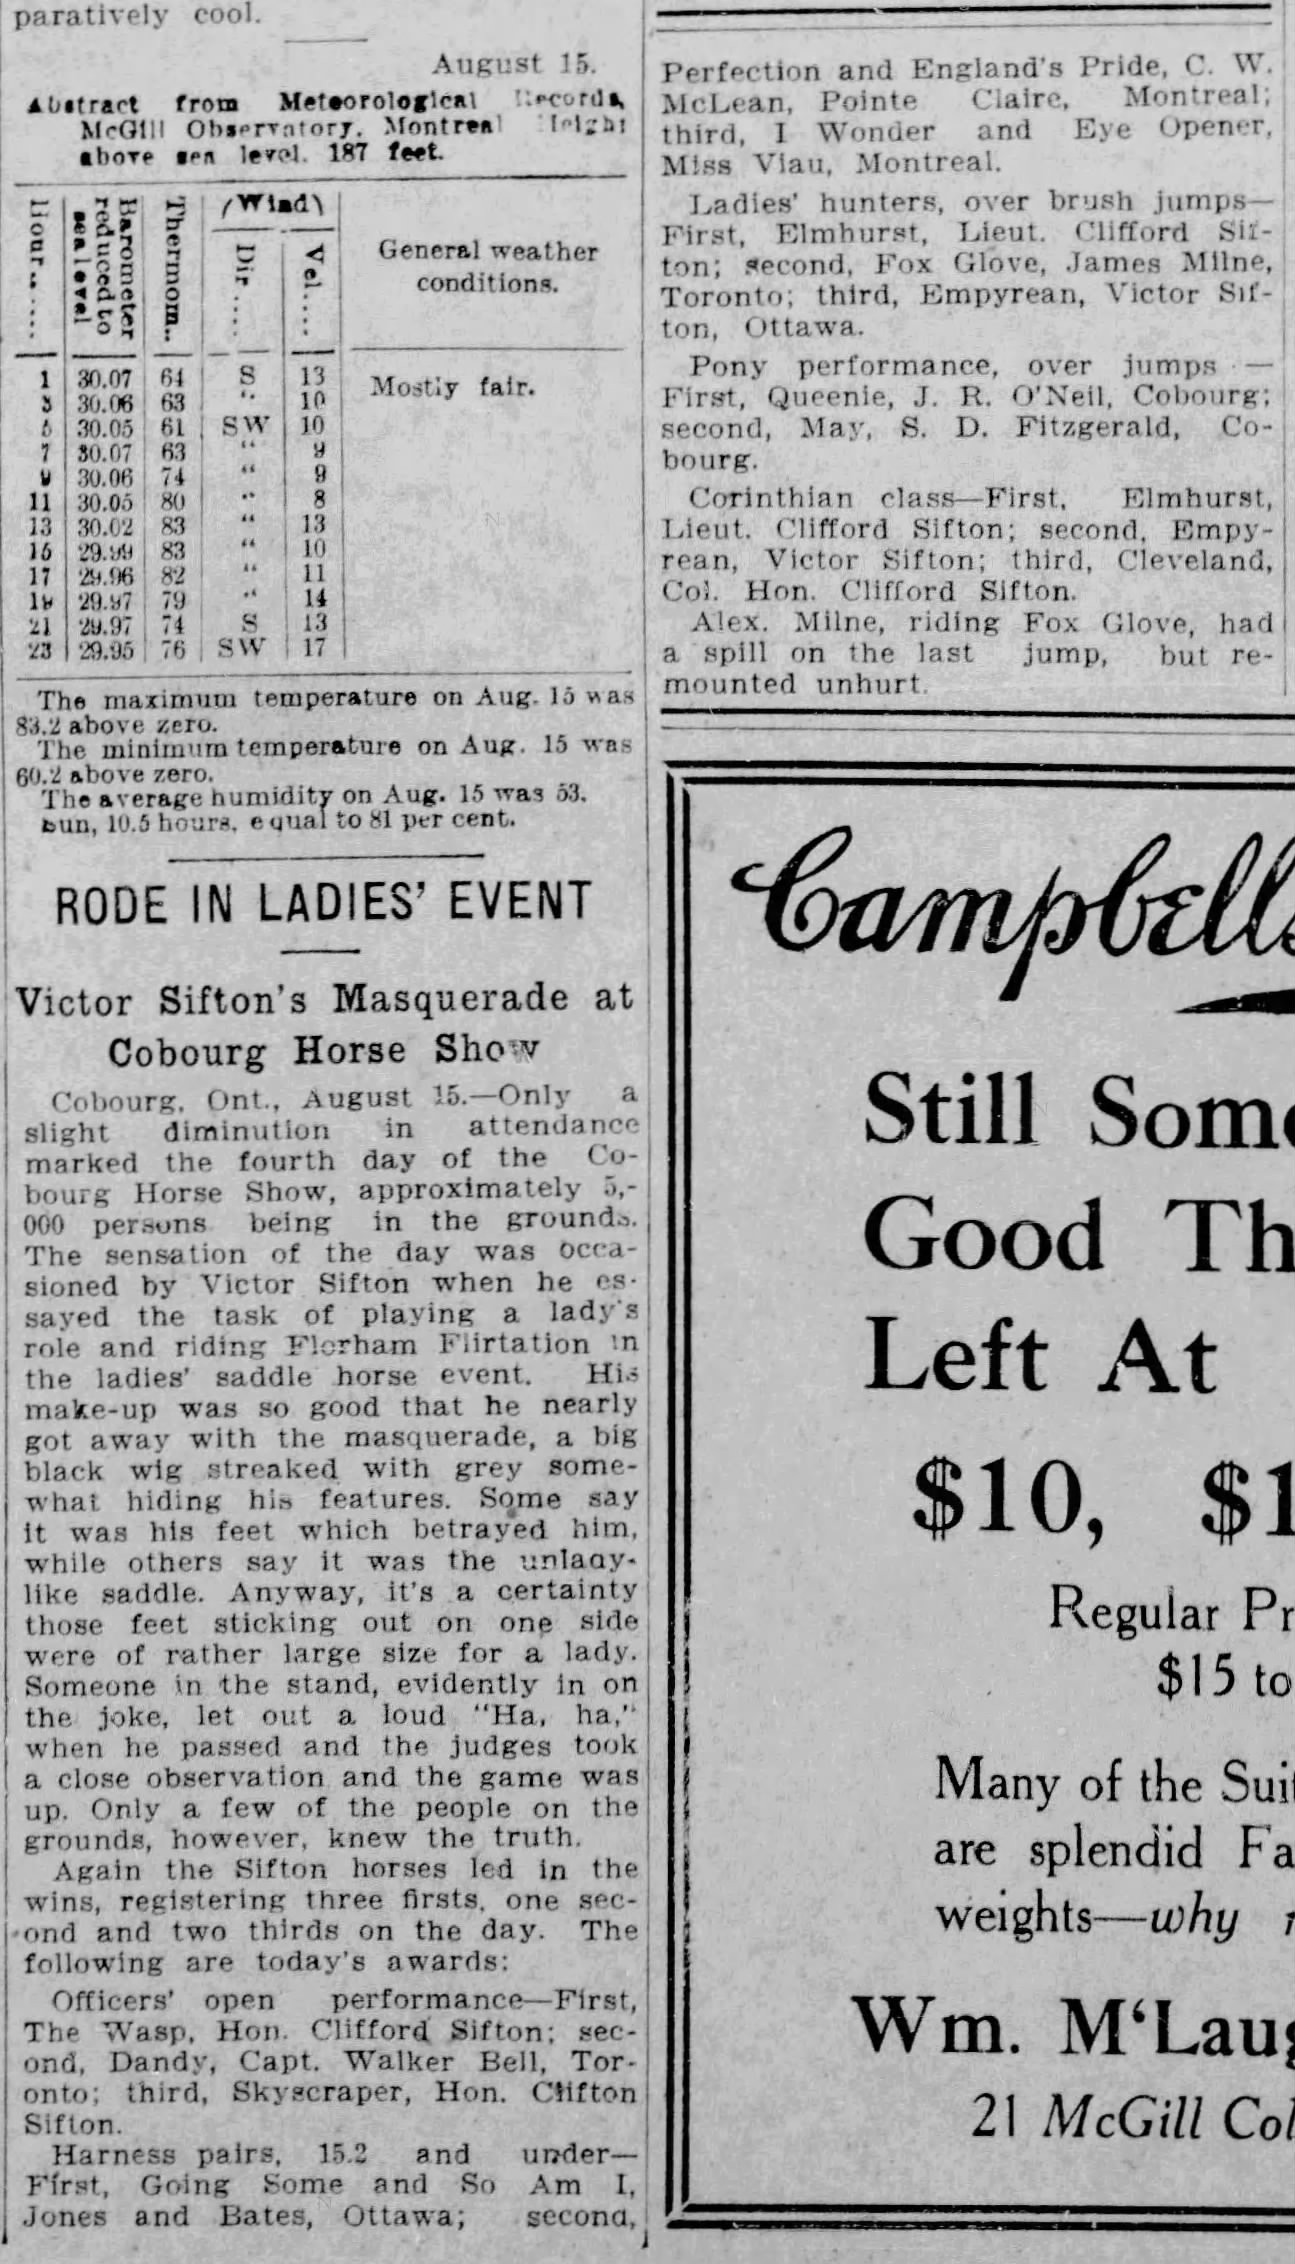 1913-08-16 Horses -Cobourg Horse Show -Montreal Gazette